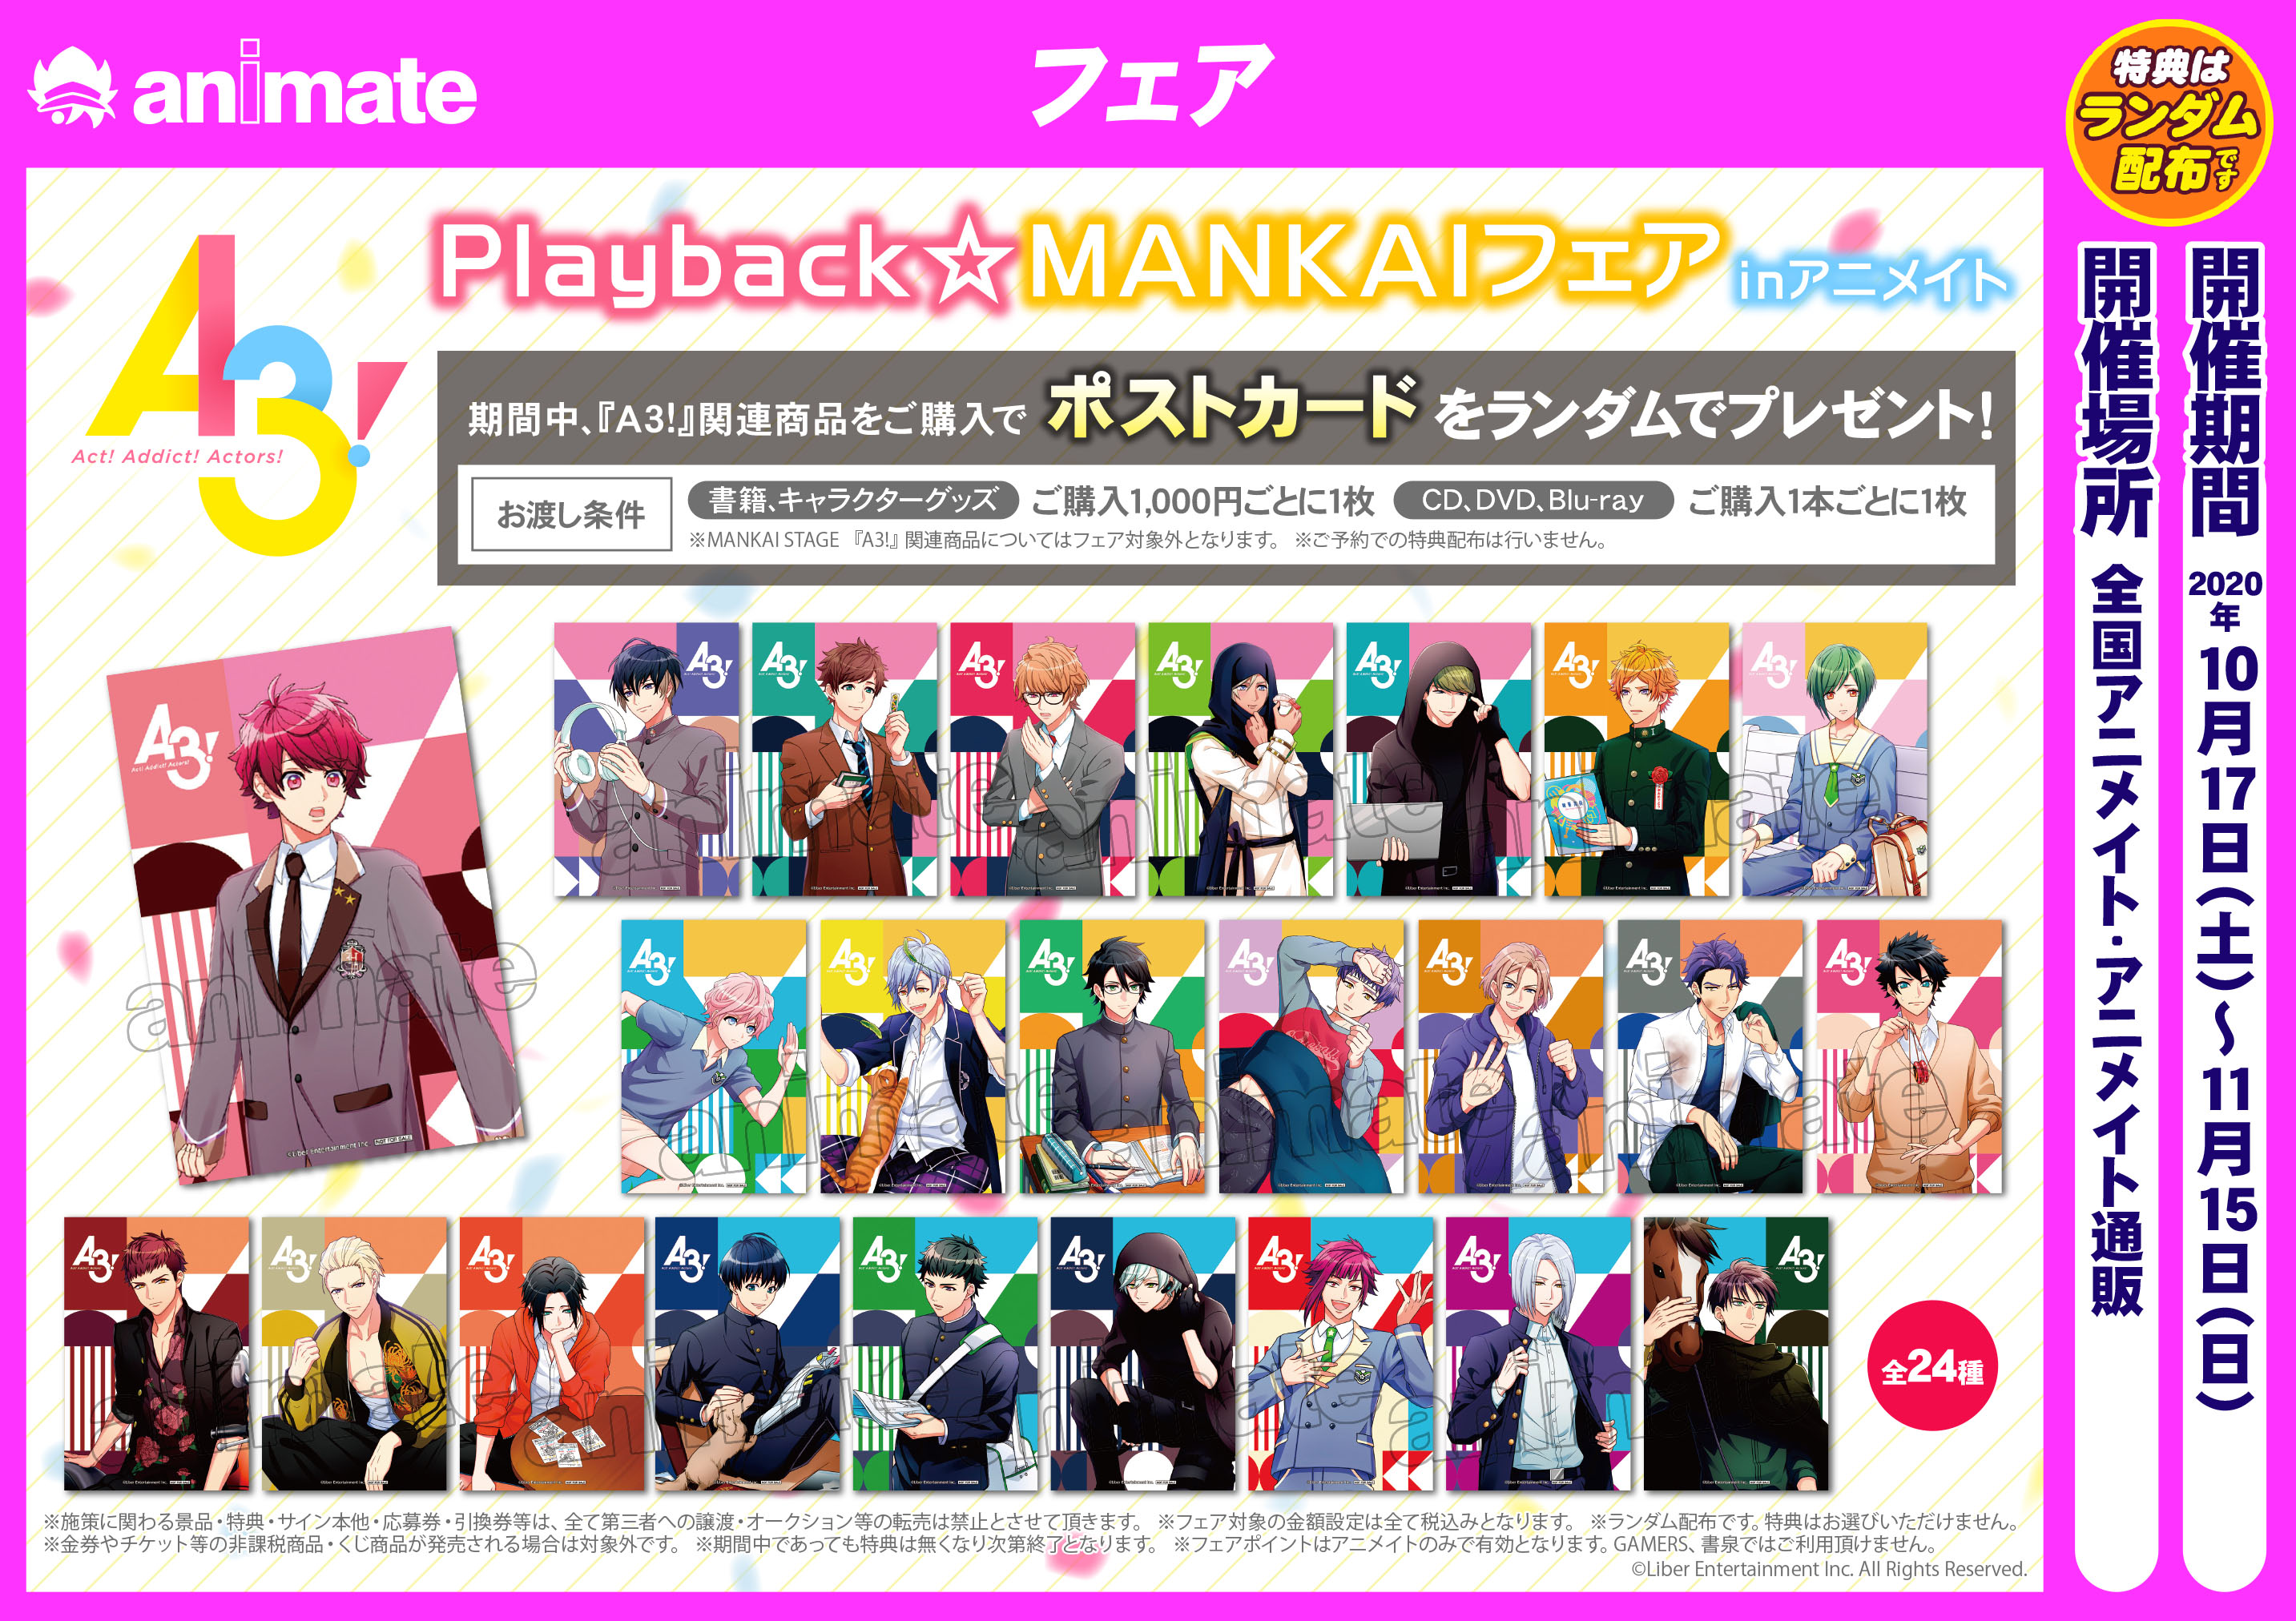 A3!』Playback☆MANKAIフェア inアニメイト 開催中！！ - アニメイト大宮